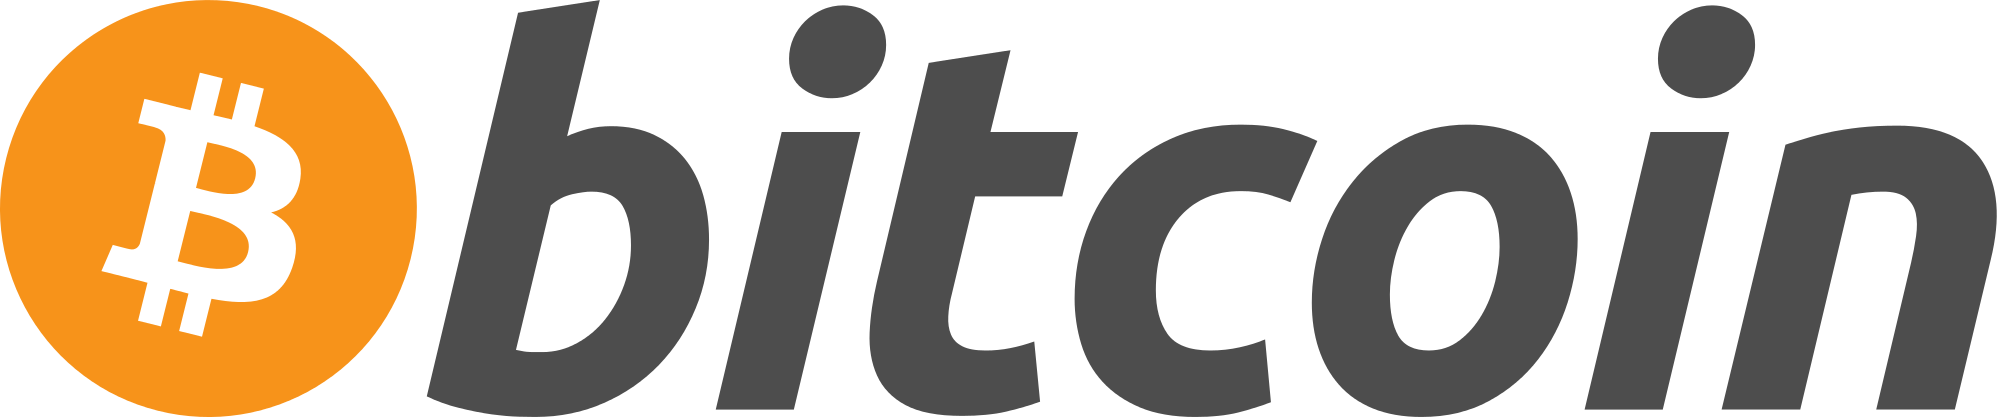 Bitcoin_logo.svg.png